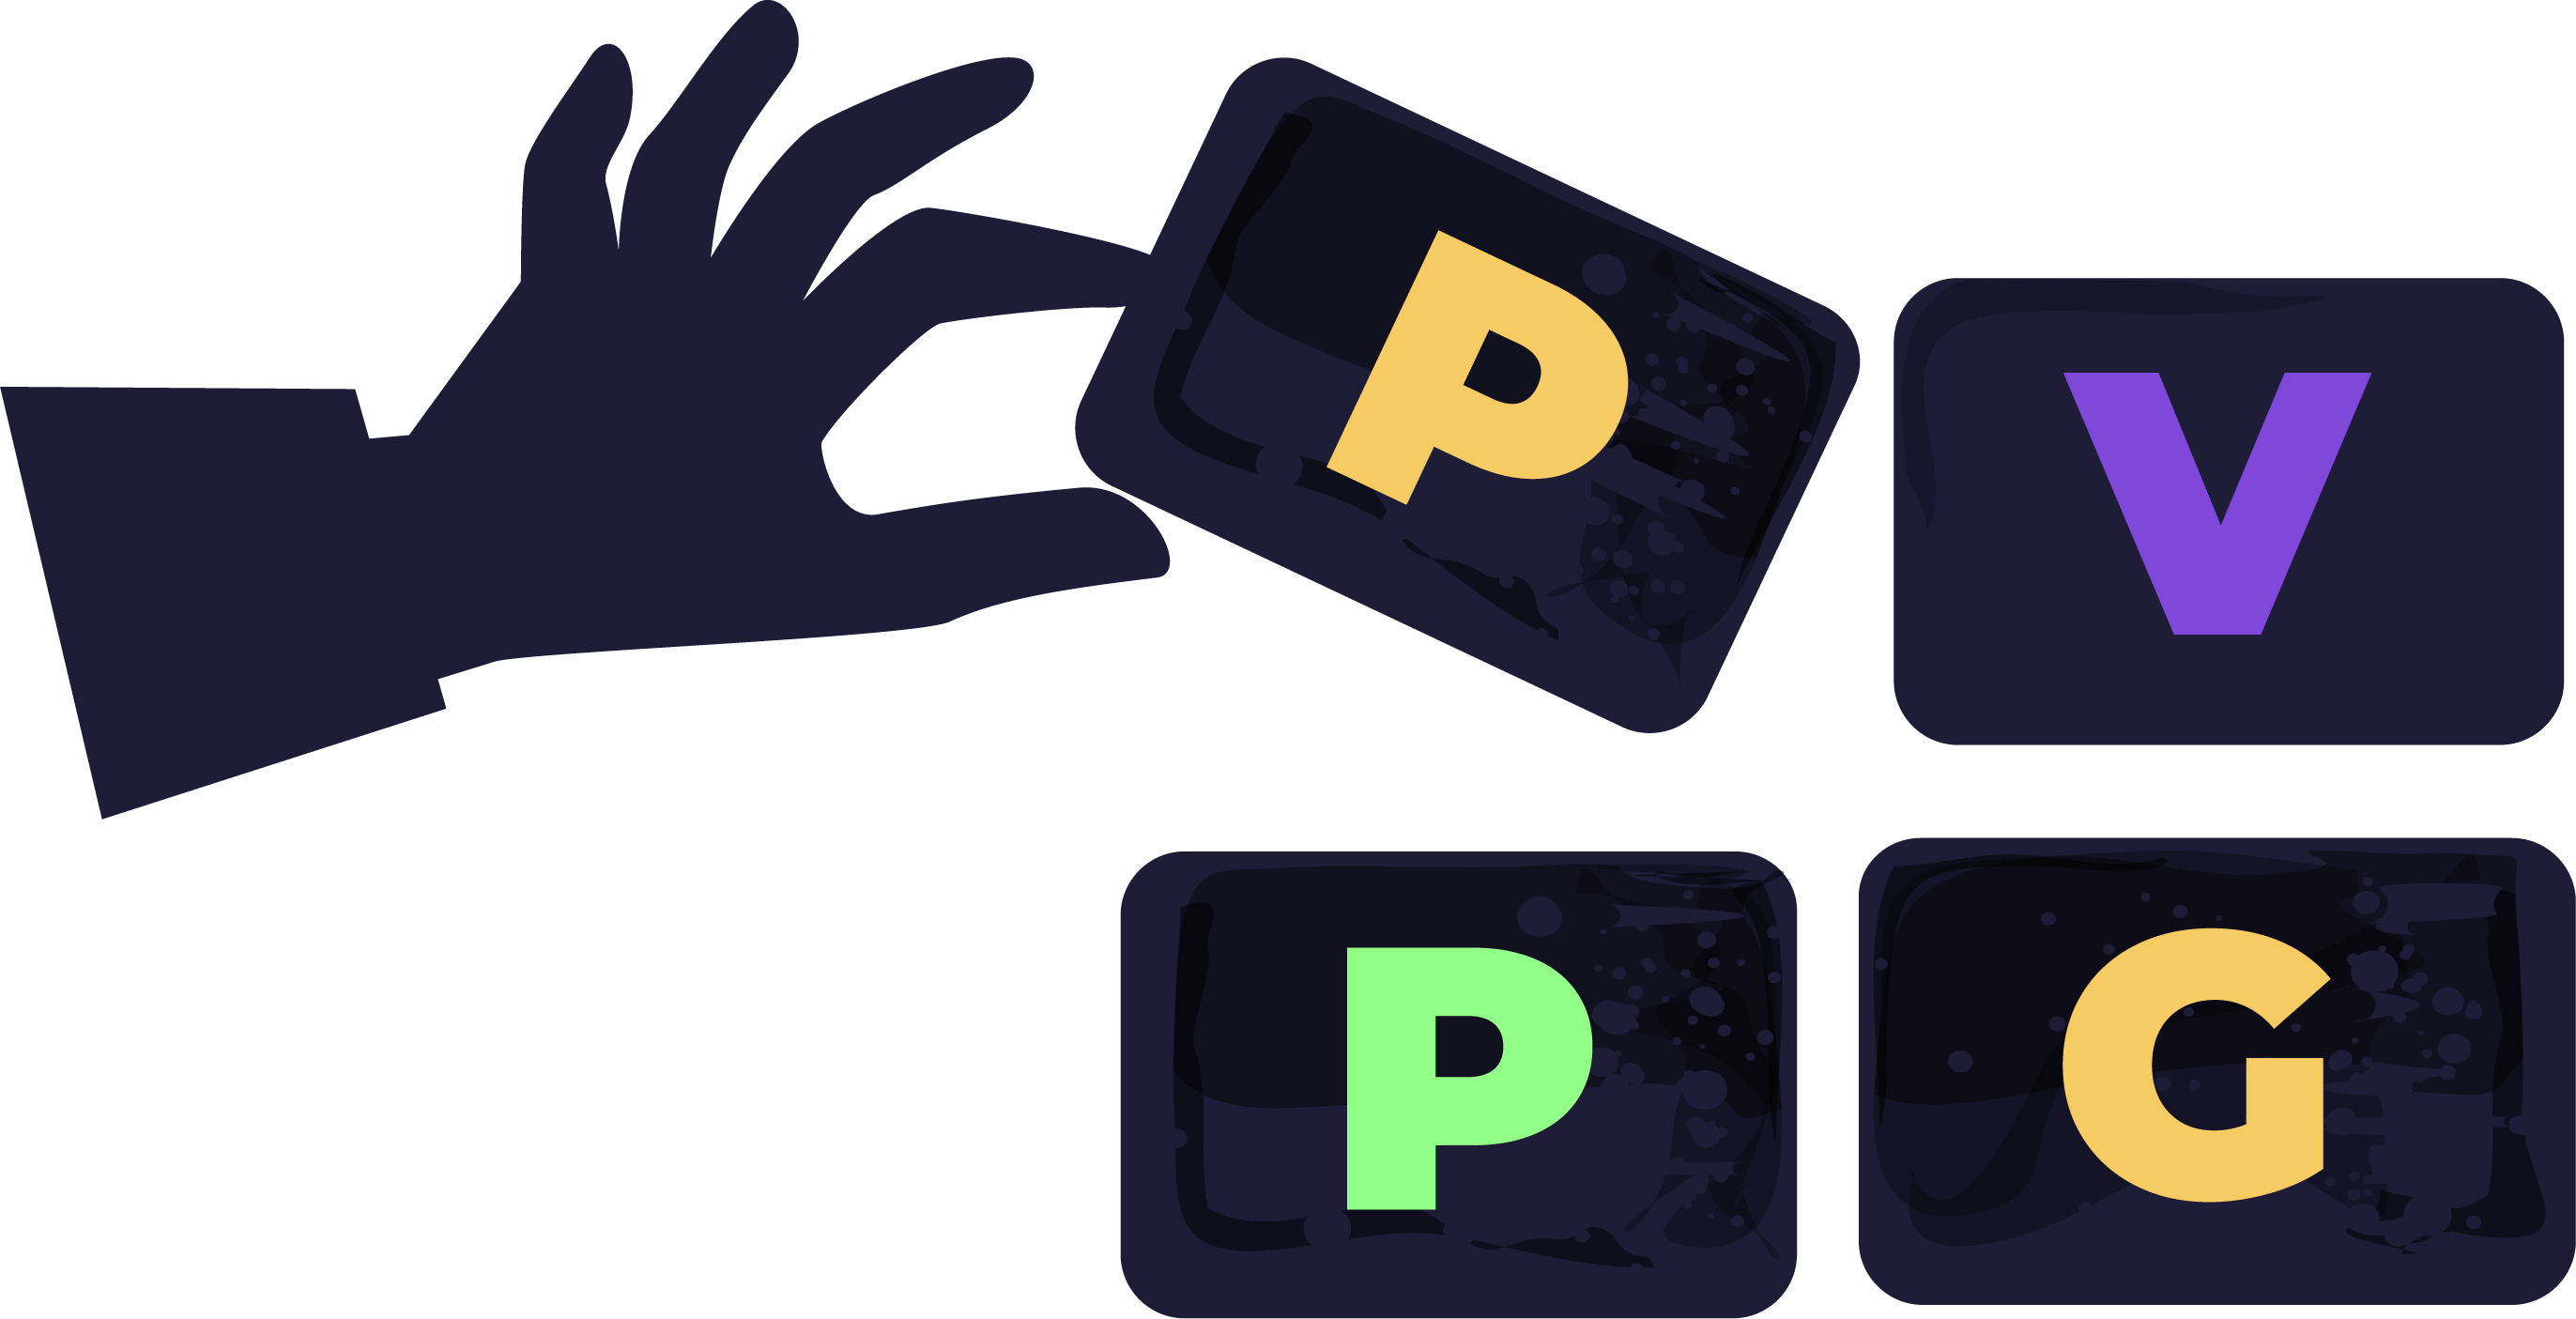 pvpg logo